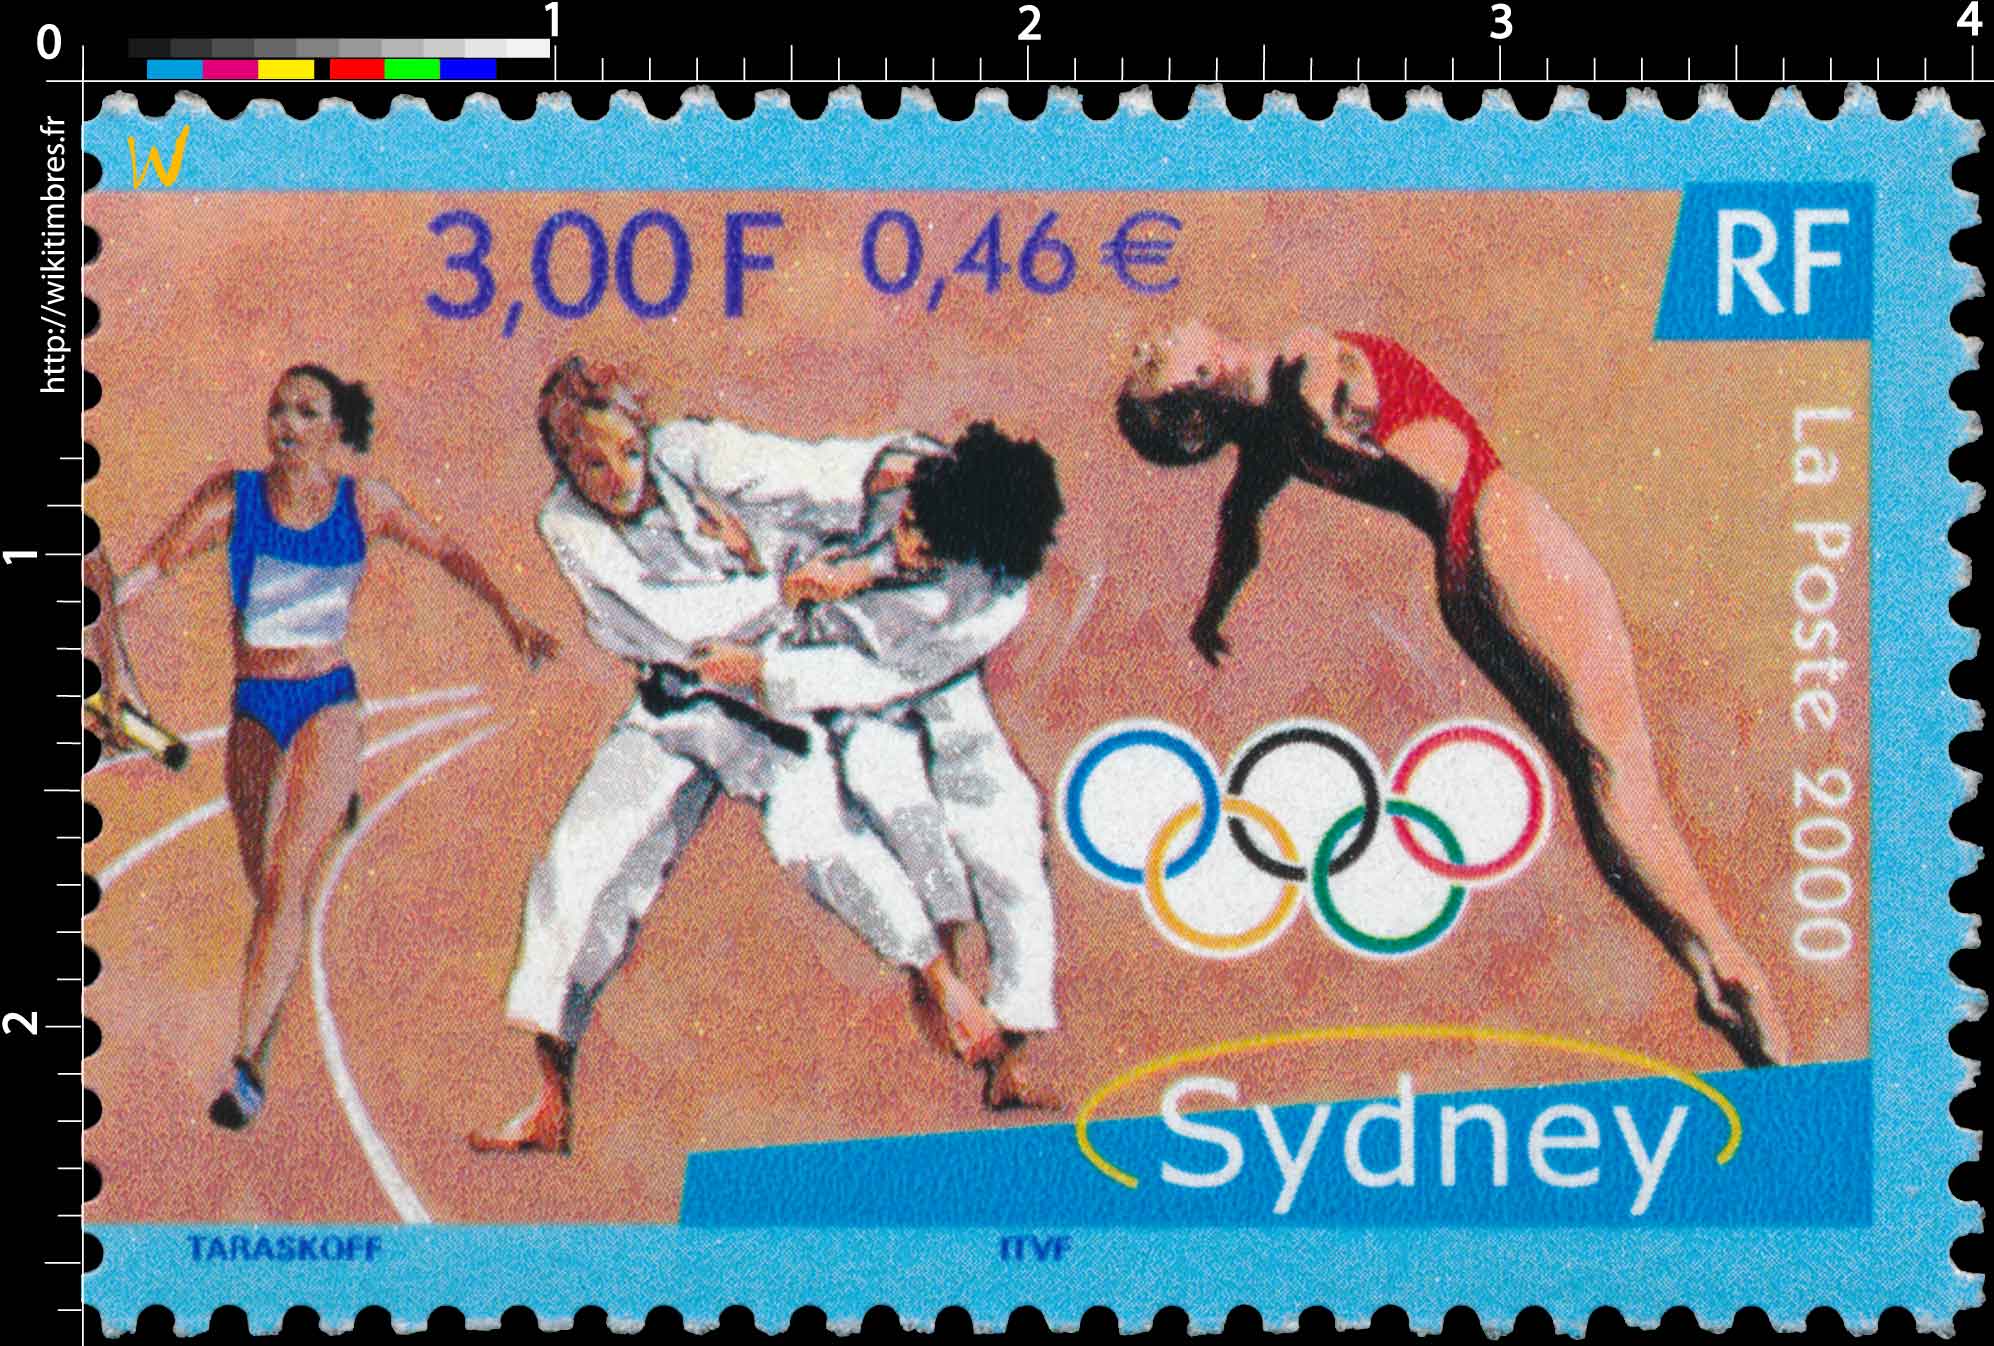 2000 Sydney